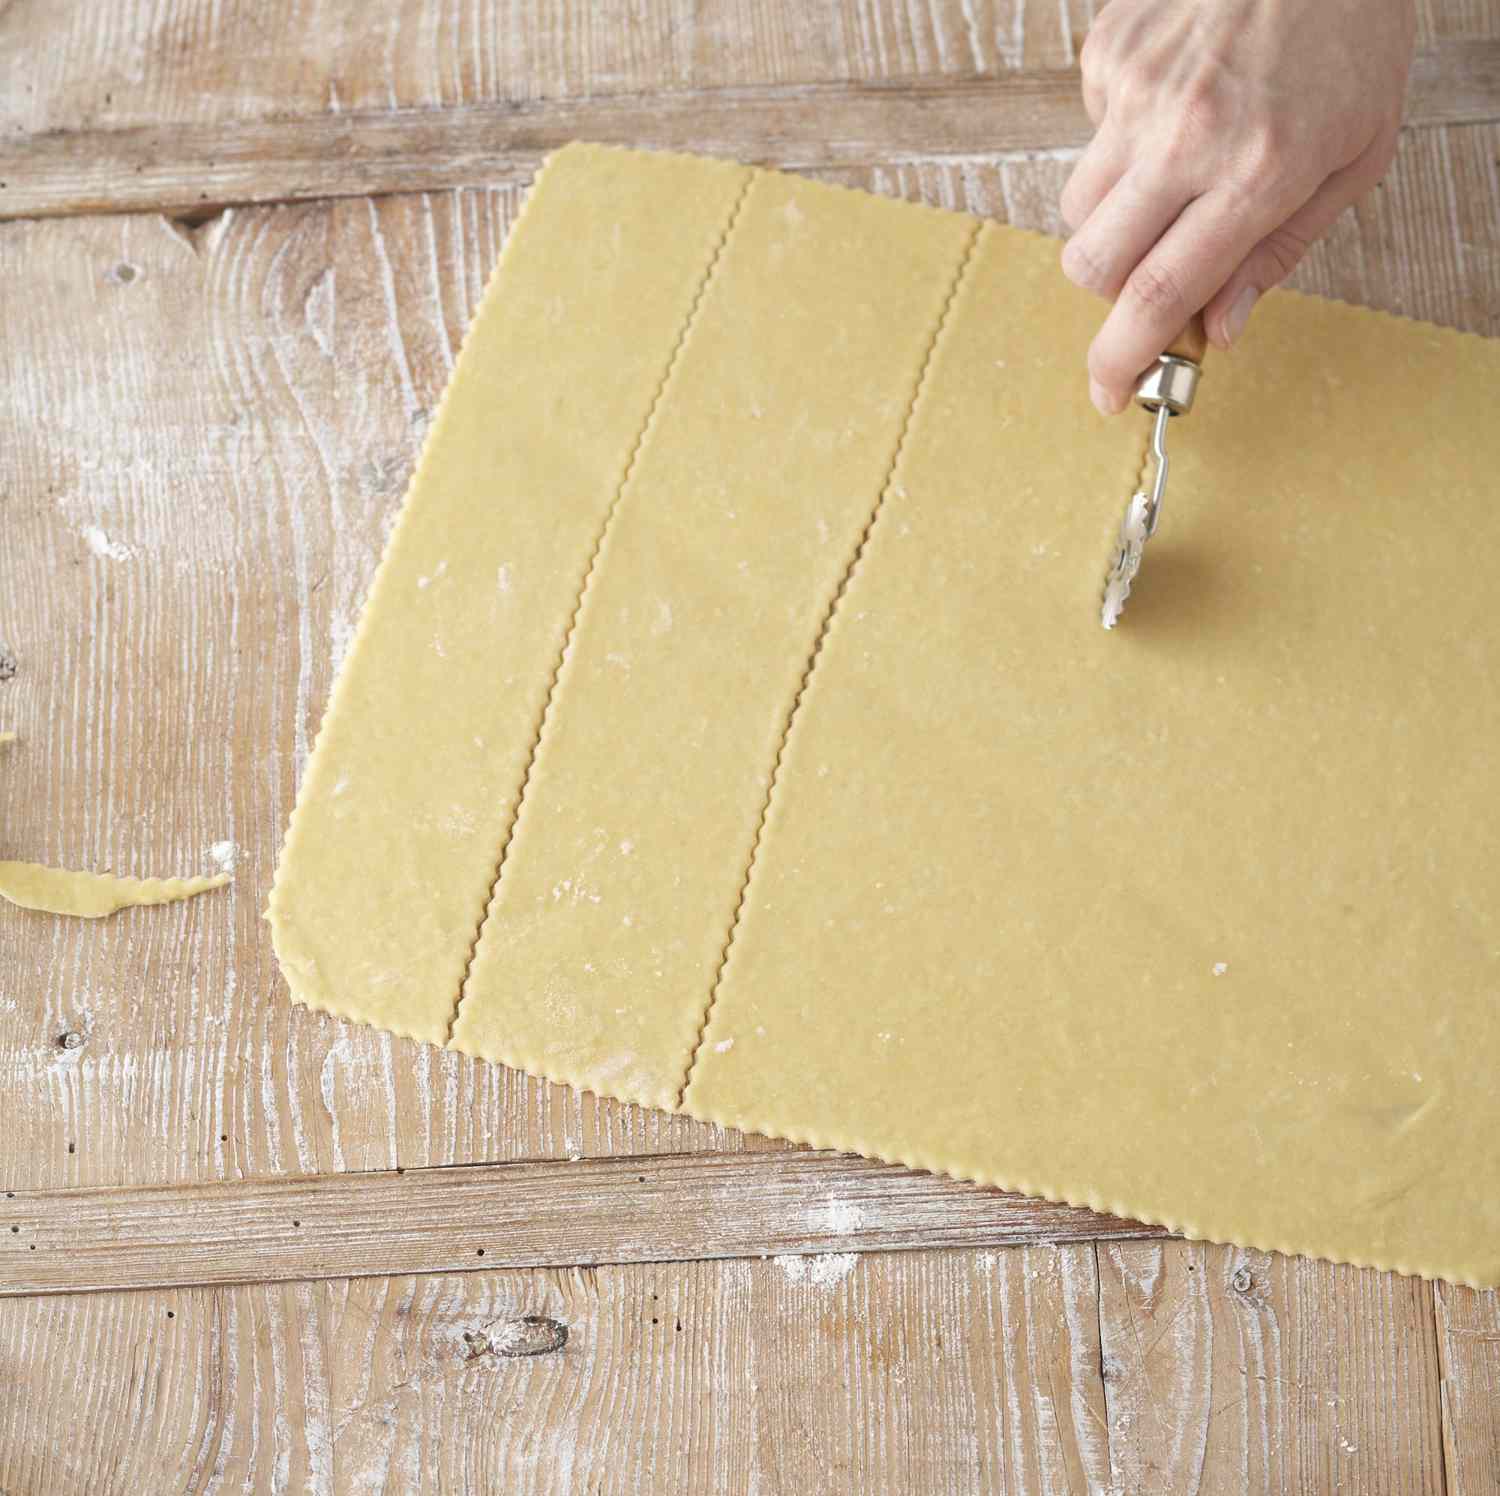 cutting dough into strips for ravioli